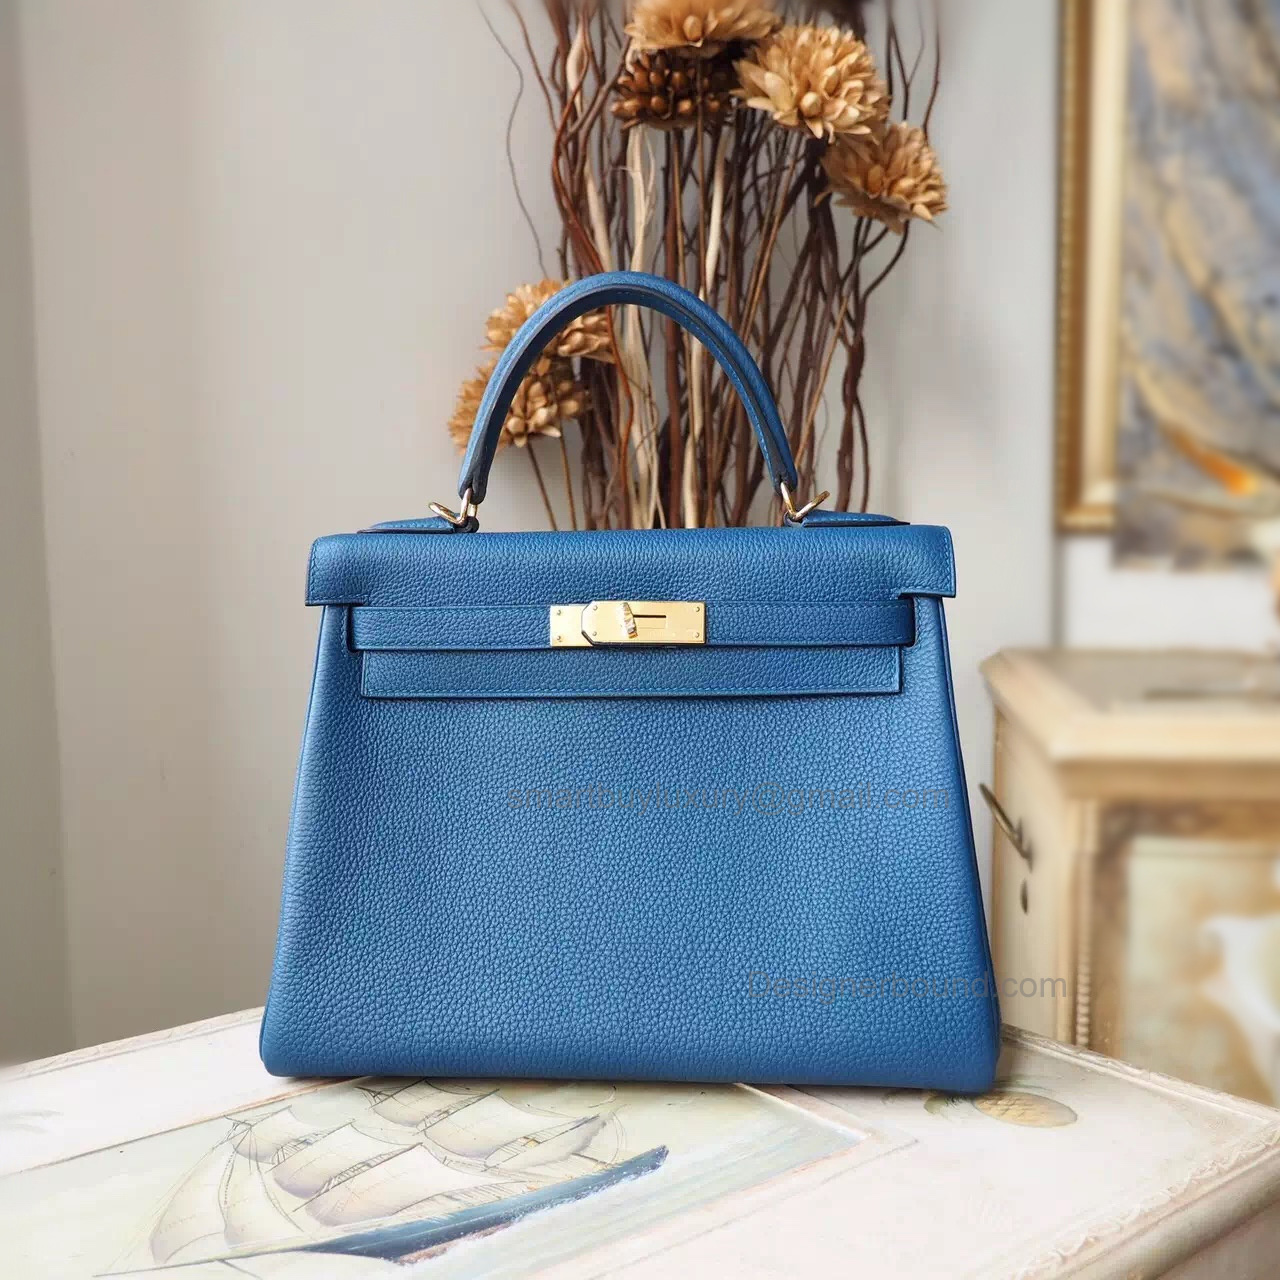 Replica Hermes Kelly 28 Handmade Bag in s7 Blue Galice Togo Calfskin GHW